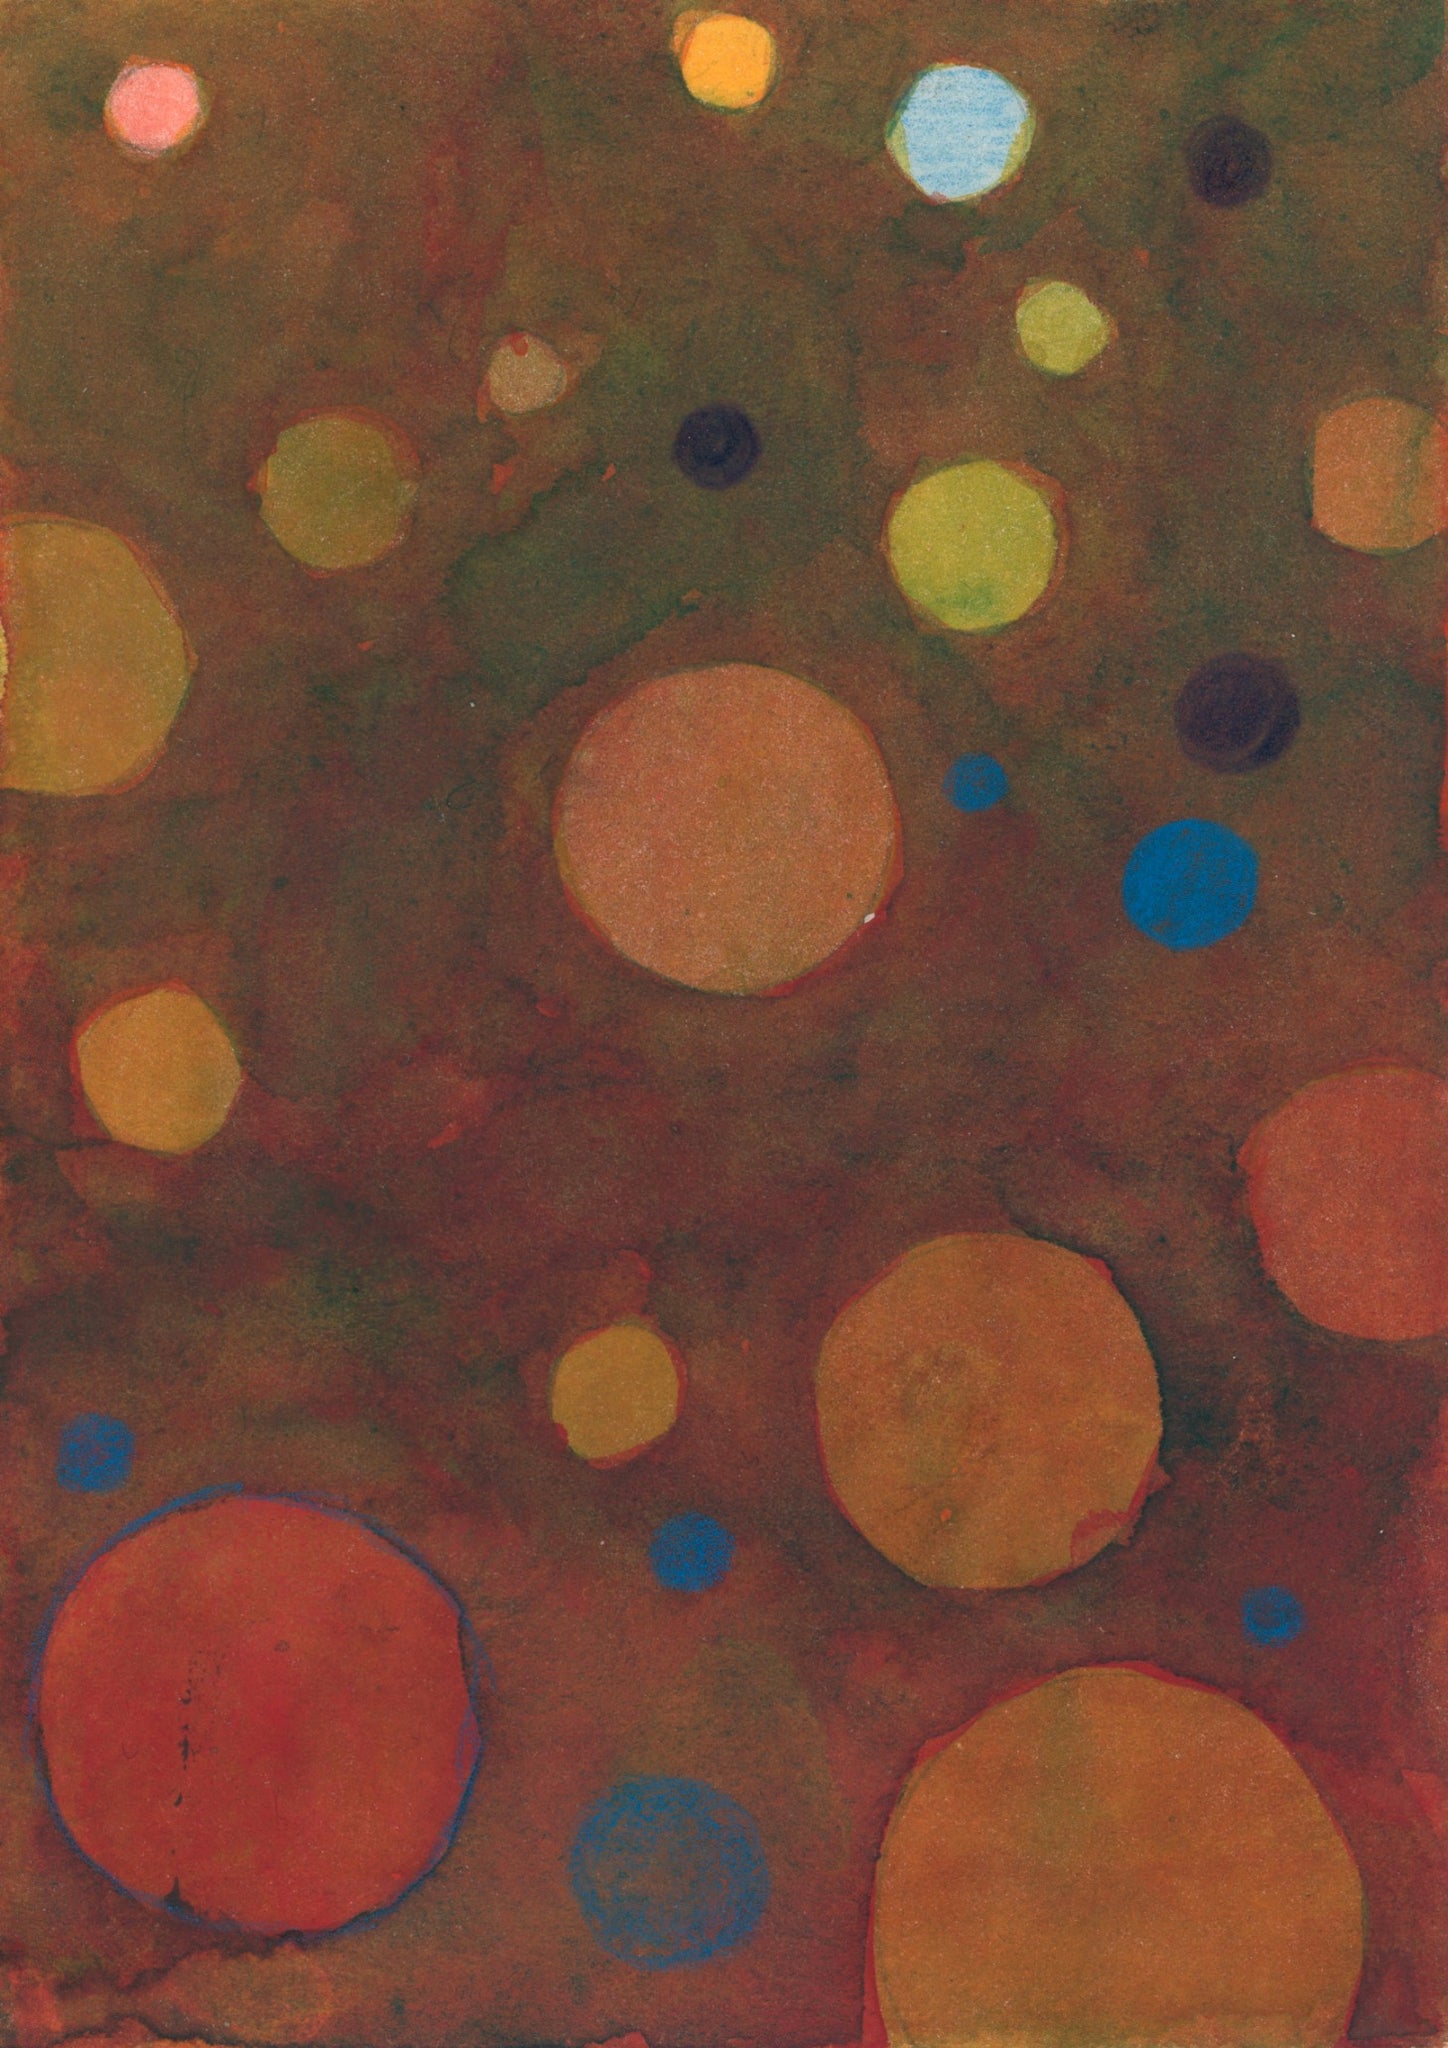 Untitled circles 1, 1991